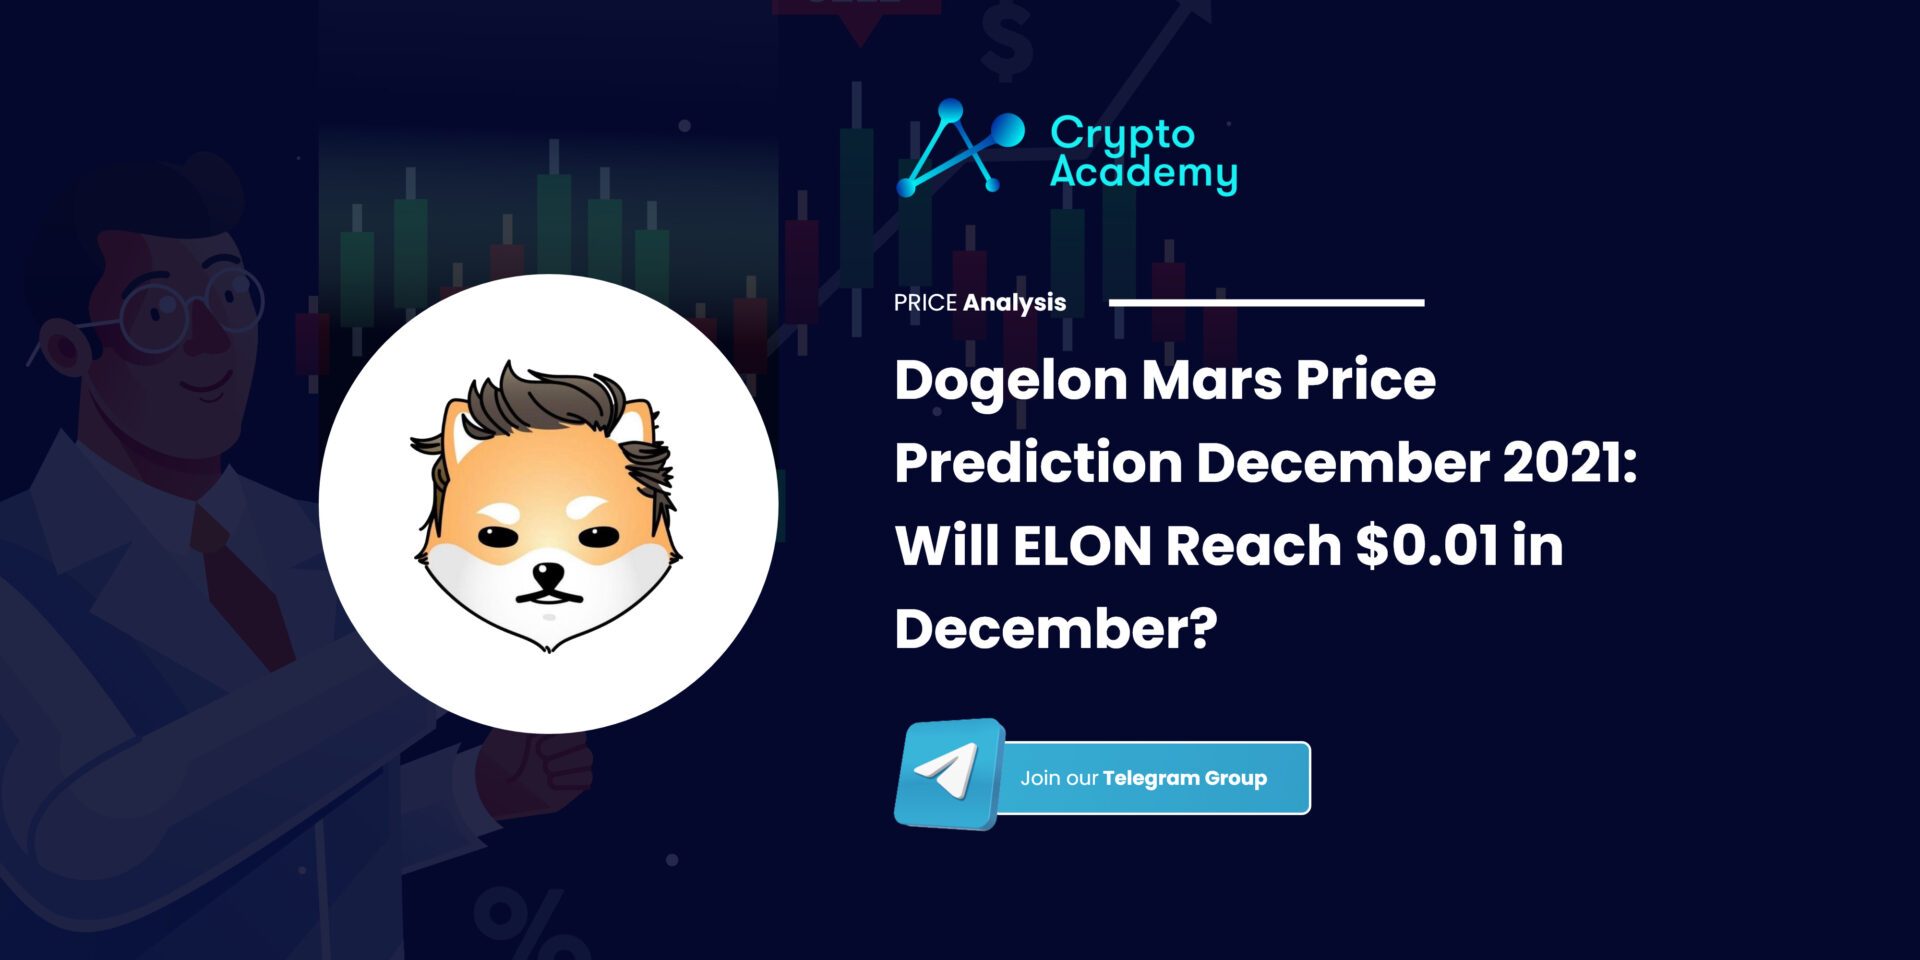 Dogelon Mars Price Prediction December 2021: Will ELON Reach $0.01 in December?